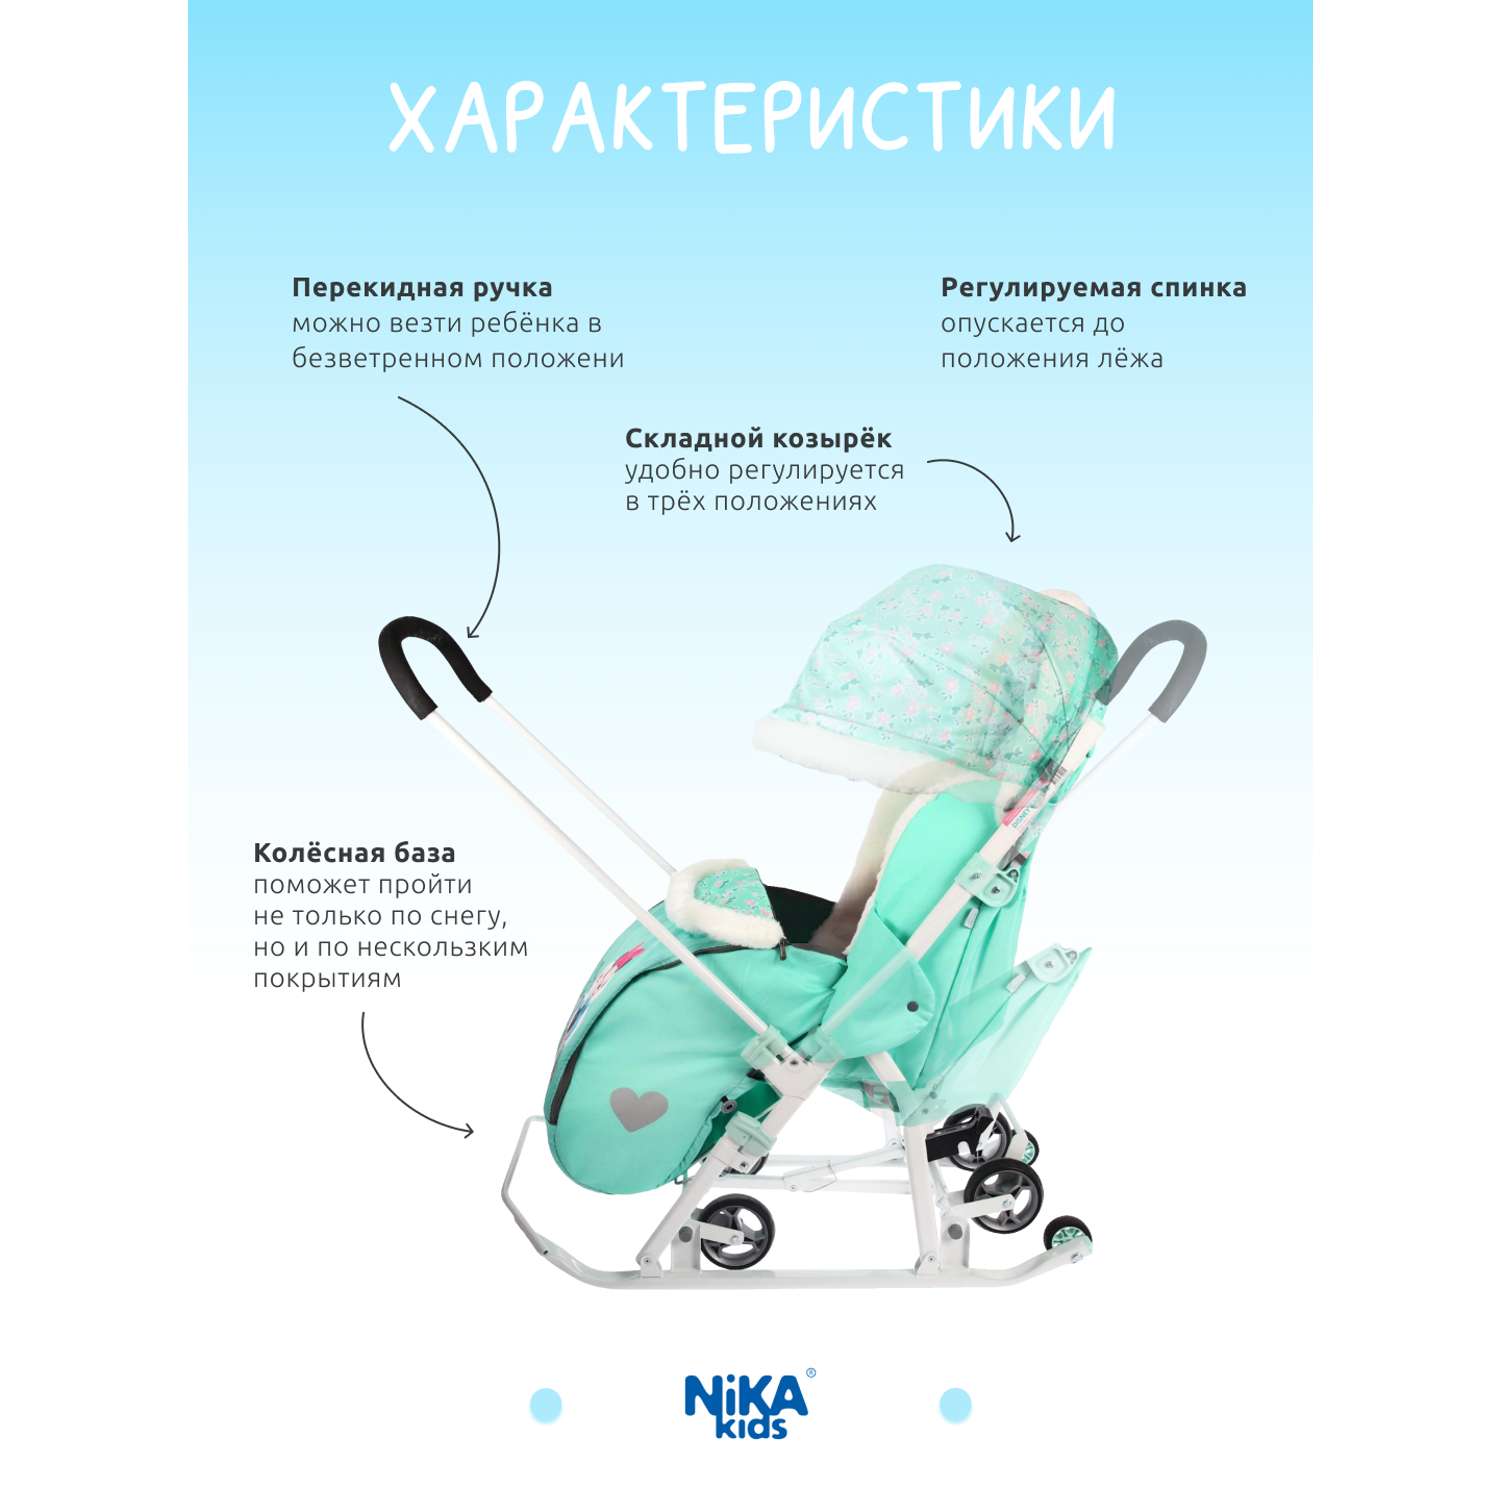 Зимние санки-коляска Nika kids Для детей - фото 2